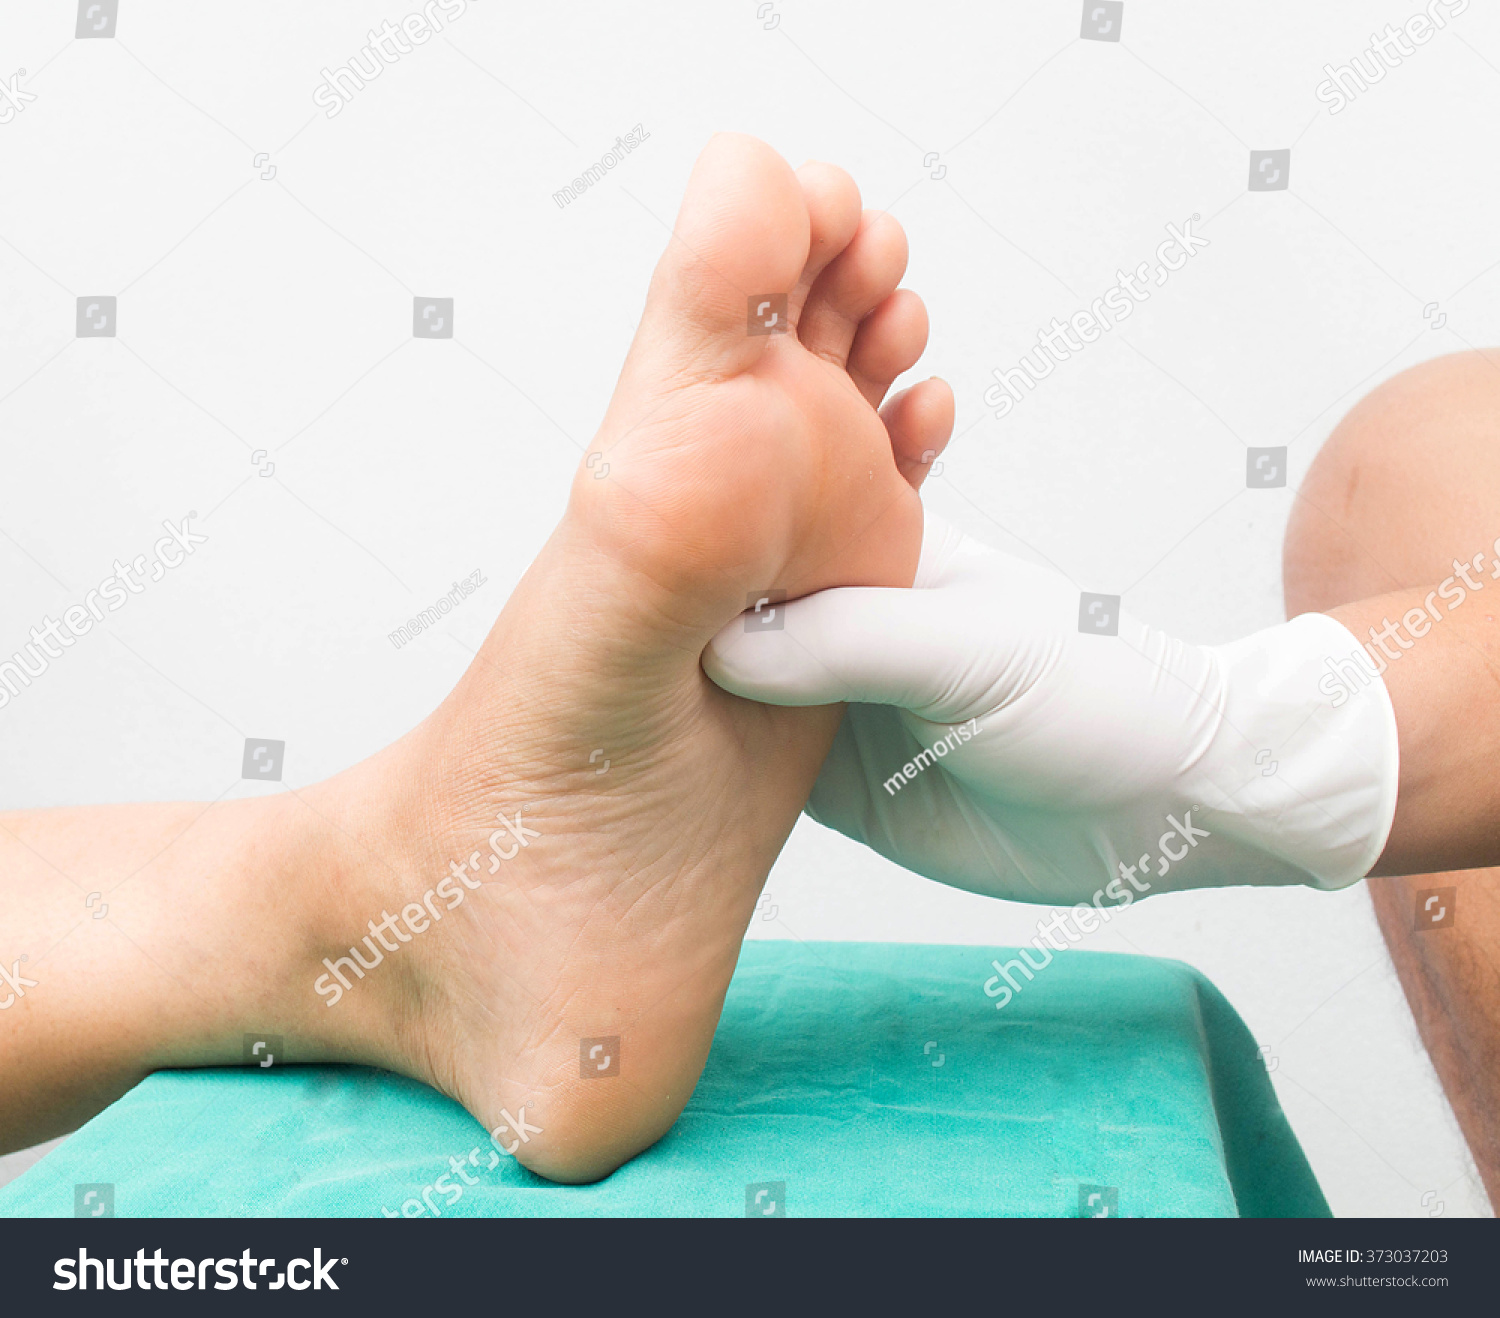 Foot Care Diabetic Neuropathy Stock Photo 373037203 : Shutterstock